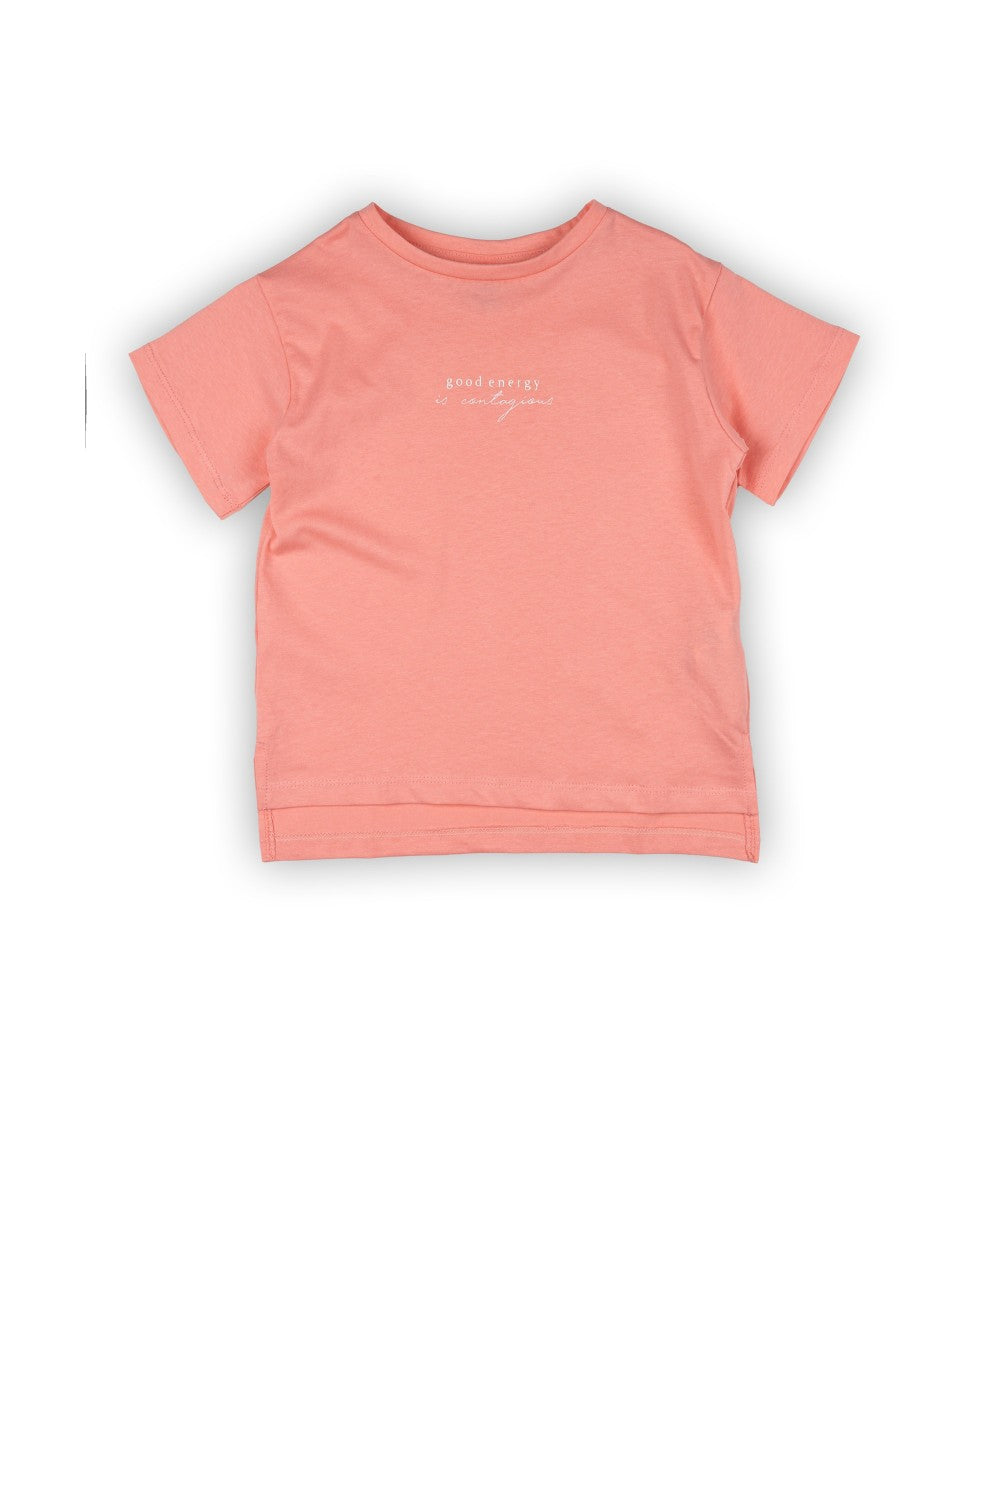 Camiseta de niña coral VERANO/Charanga